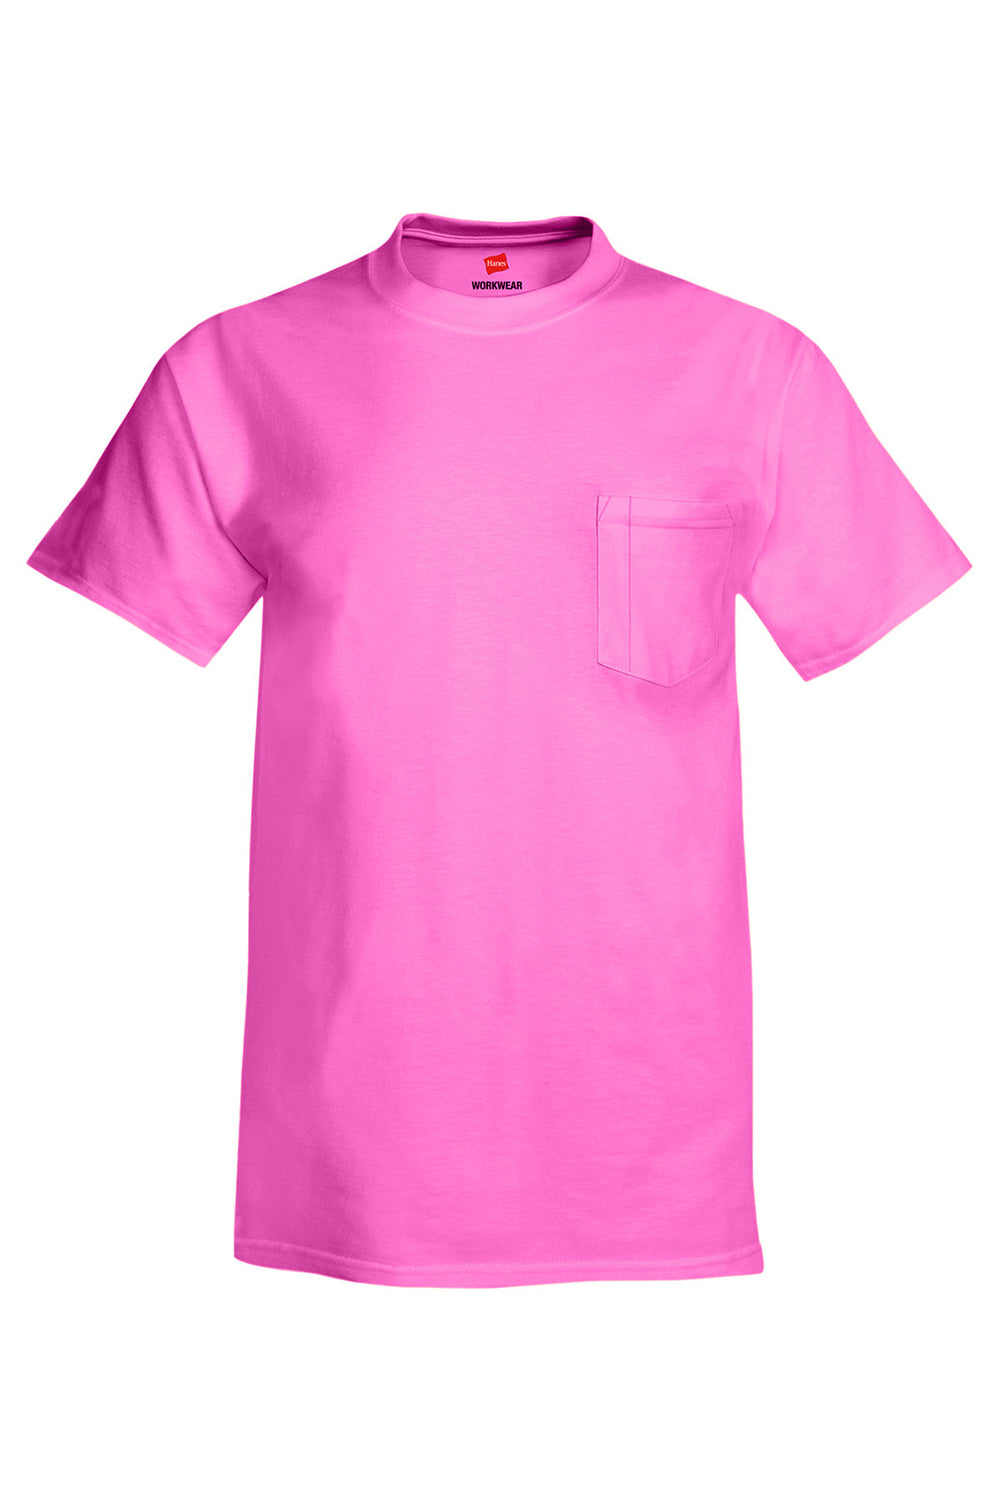 Hanes W110 Mens Workwear Short Sleeve Crewneck T-Shirt w/ Pocket Safety Pink Flat Front